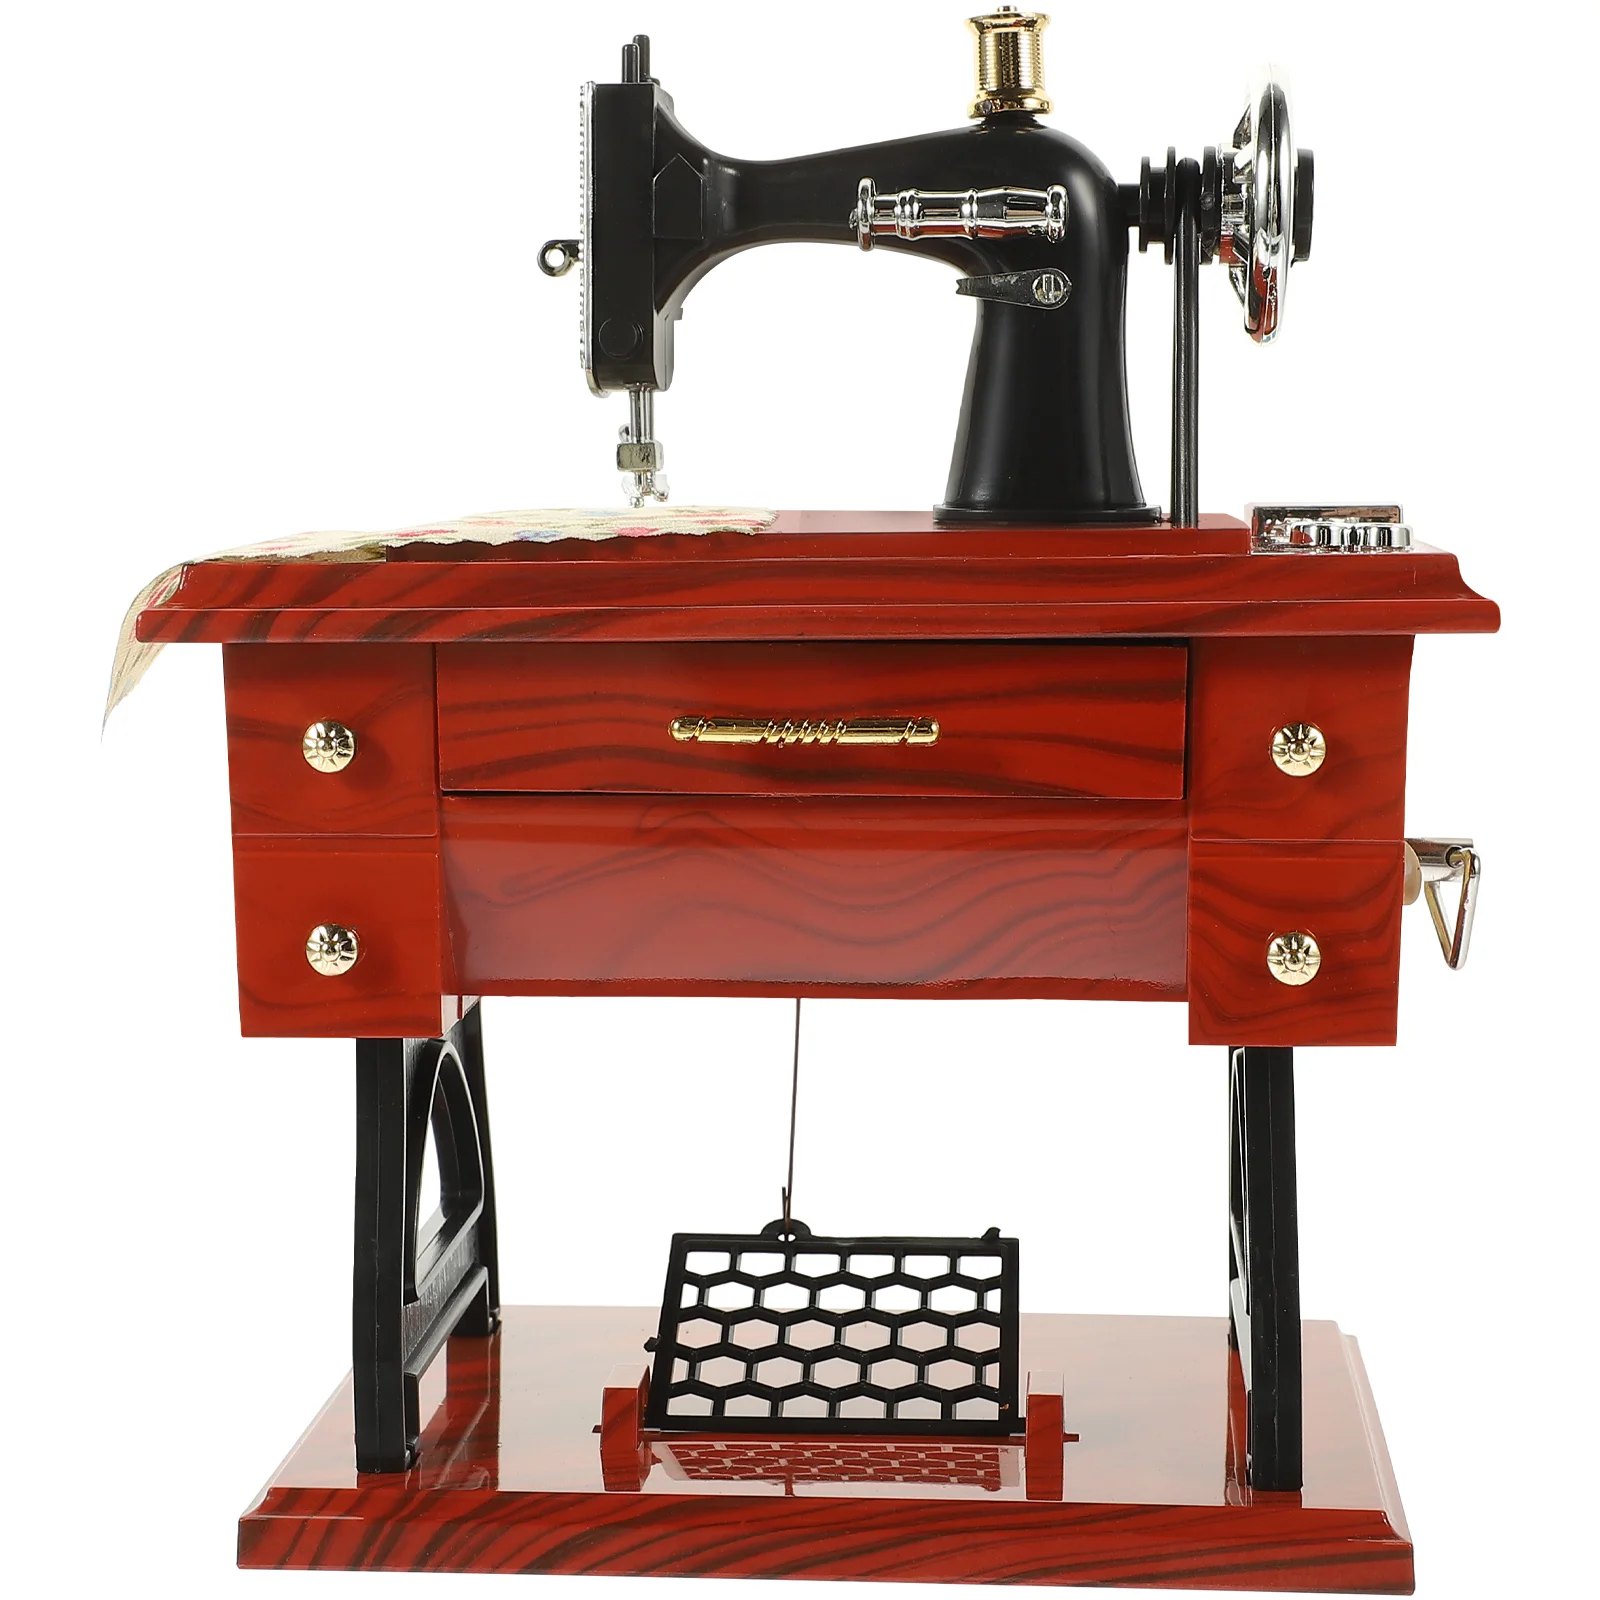 

Music Machine Box Sewing Vintage Sartorius Mini Musical Toy Decor Simulation Sweing Model Cranked Hand Mechanism Statue Retro